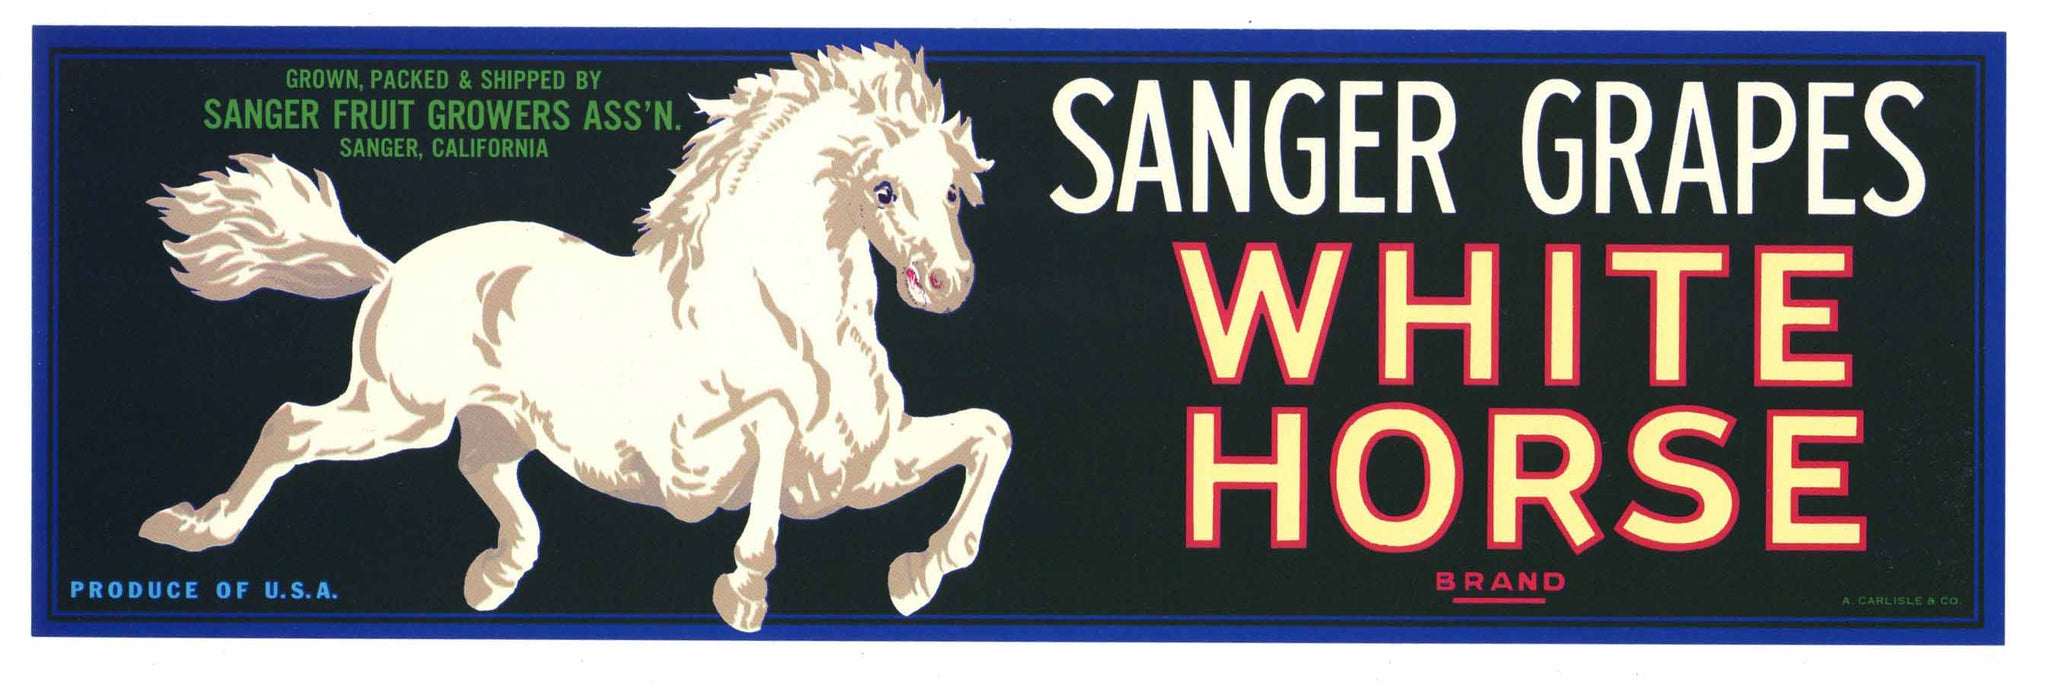 White Horse Brand Vintage Sanger Grape Crate Label